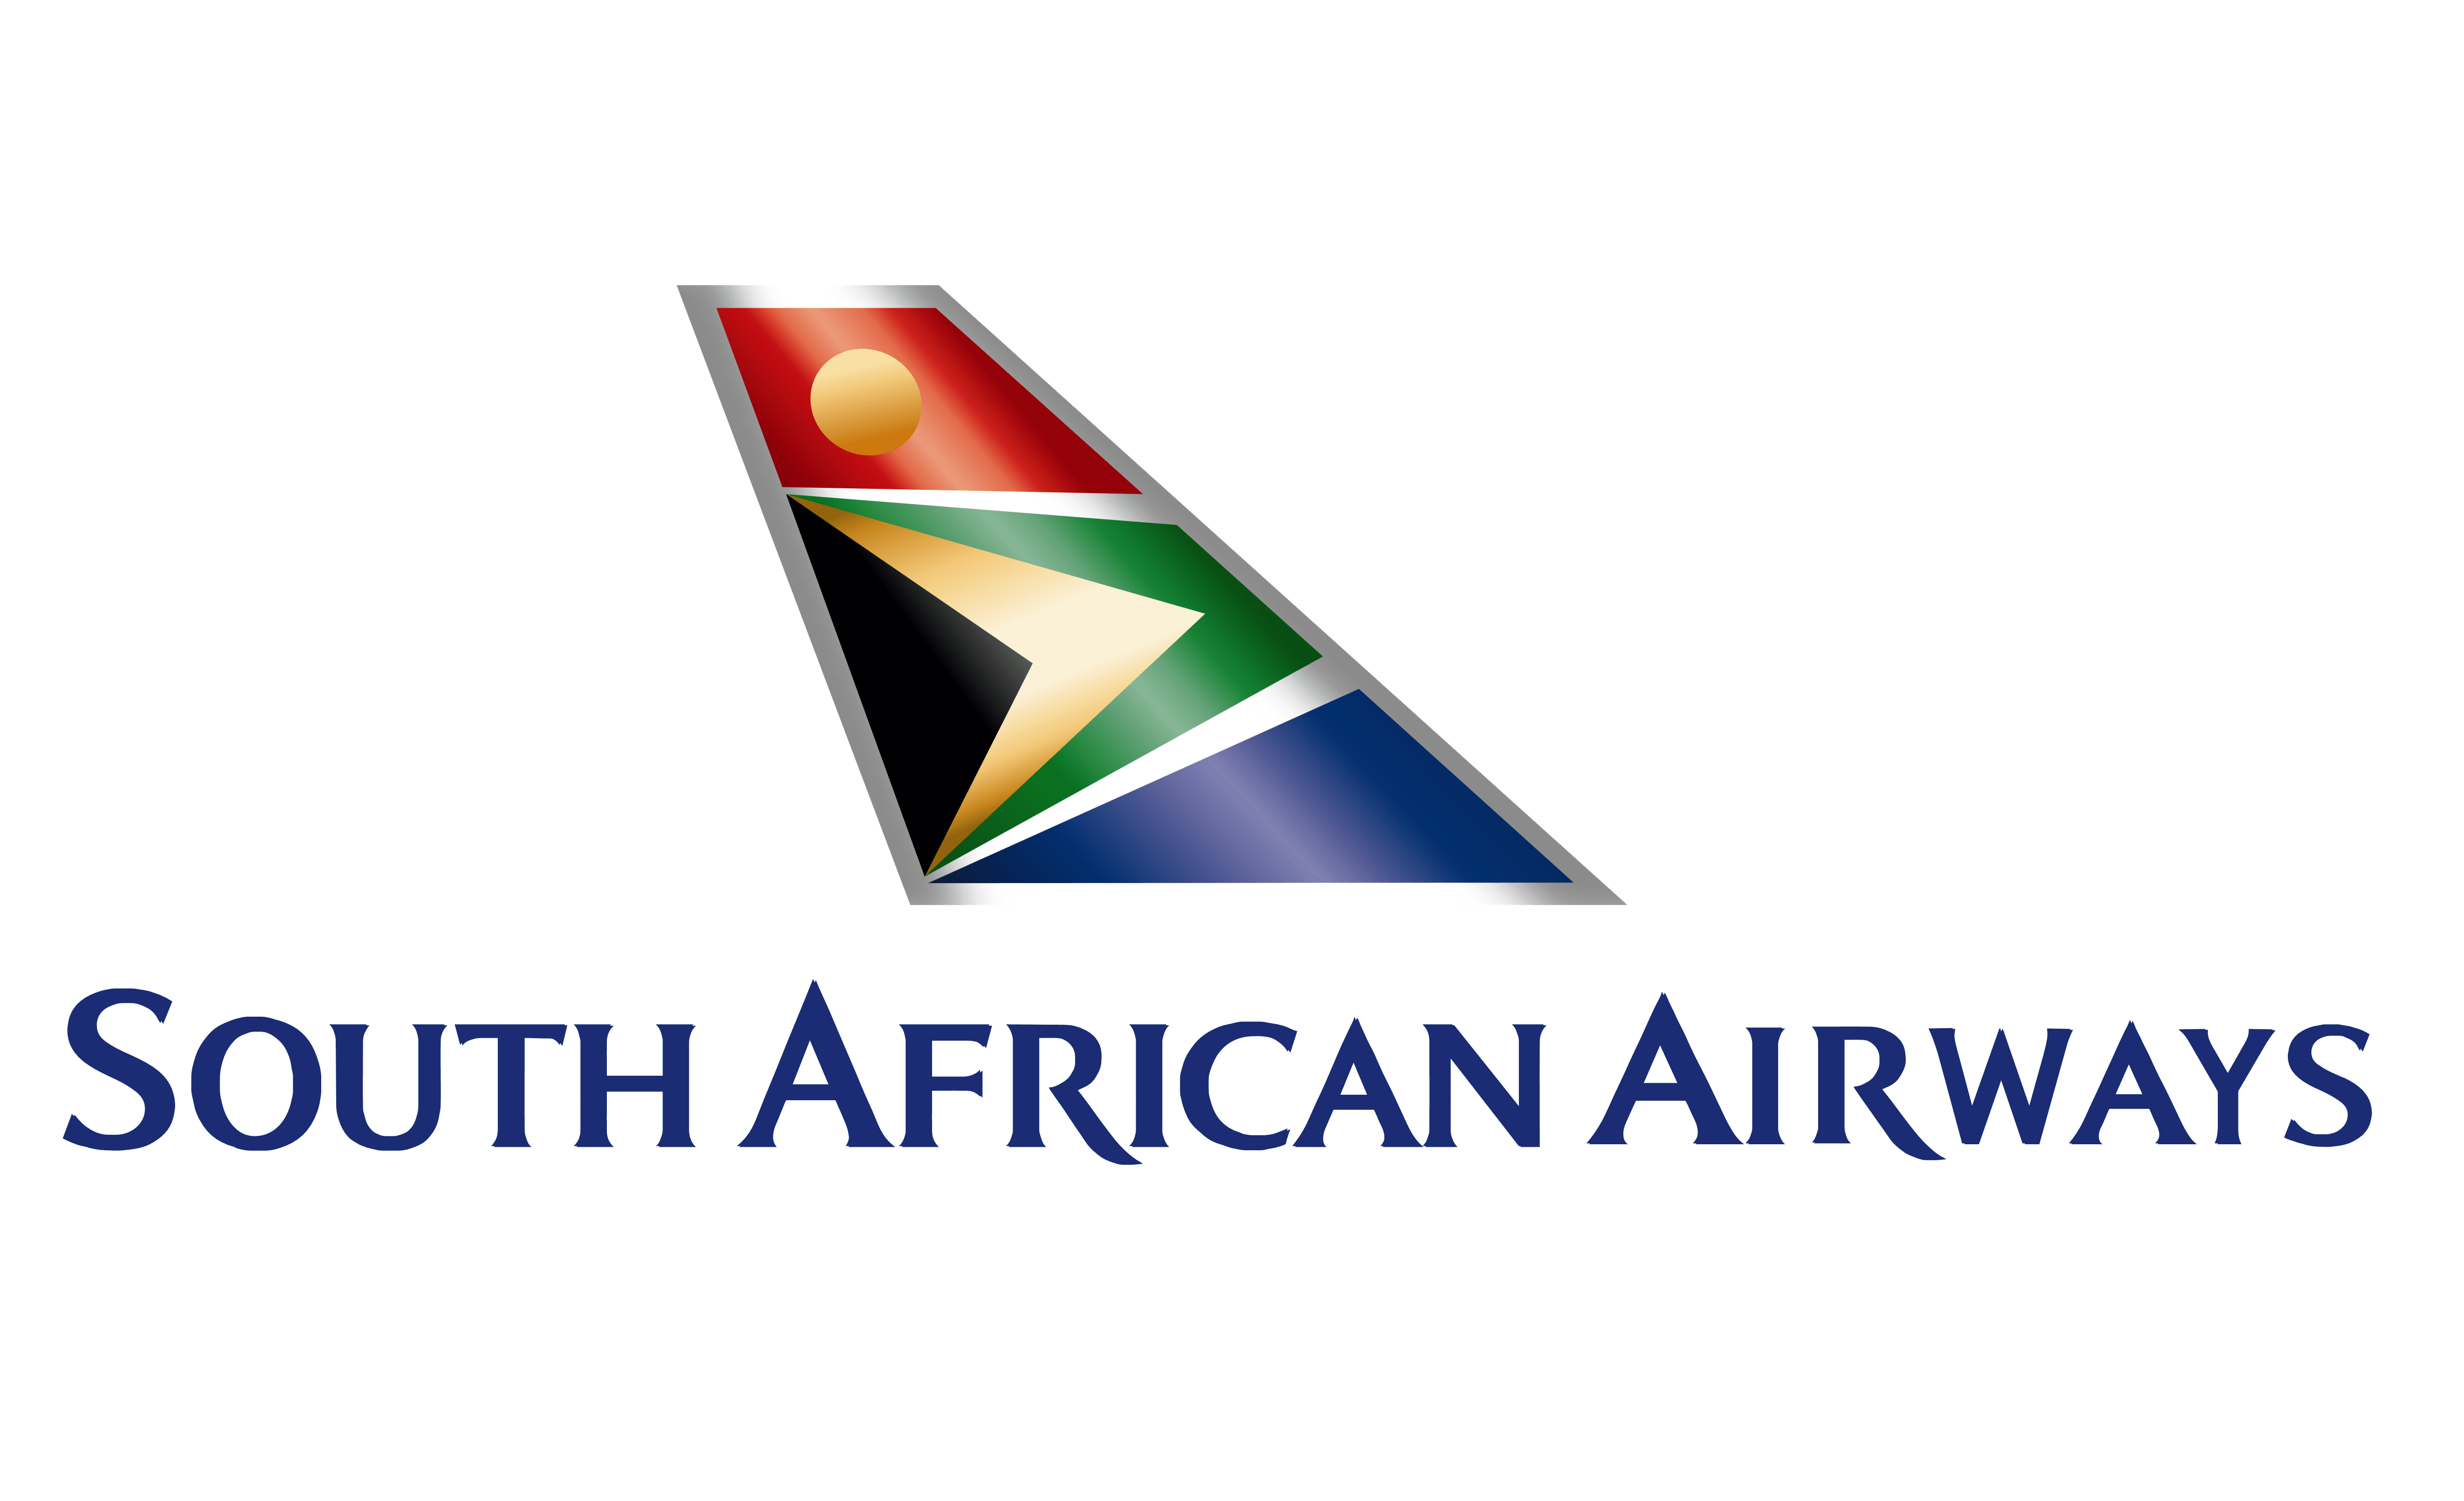 The DTI, Republic of South Africa Logo by AJBThePSAndXF2001 on DeviantArt